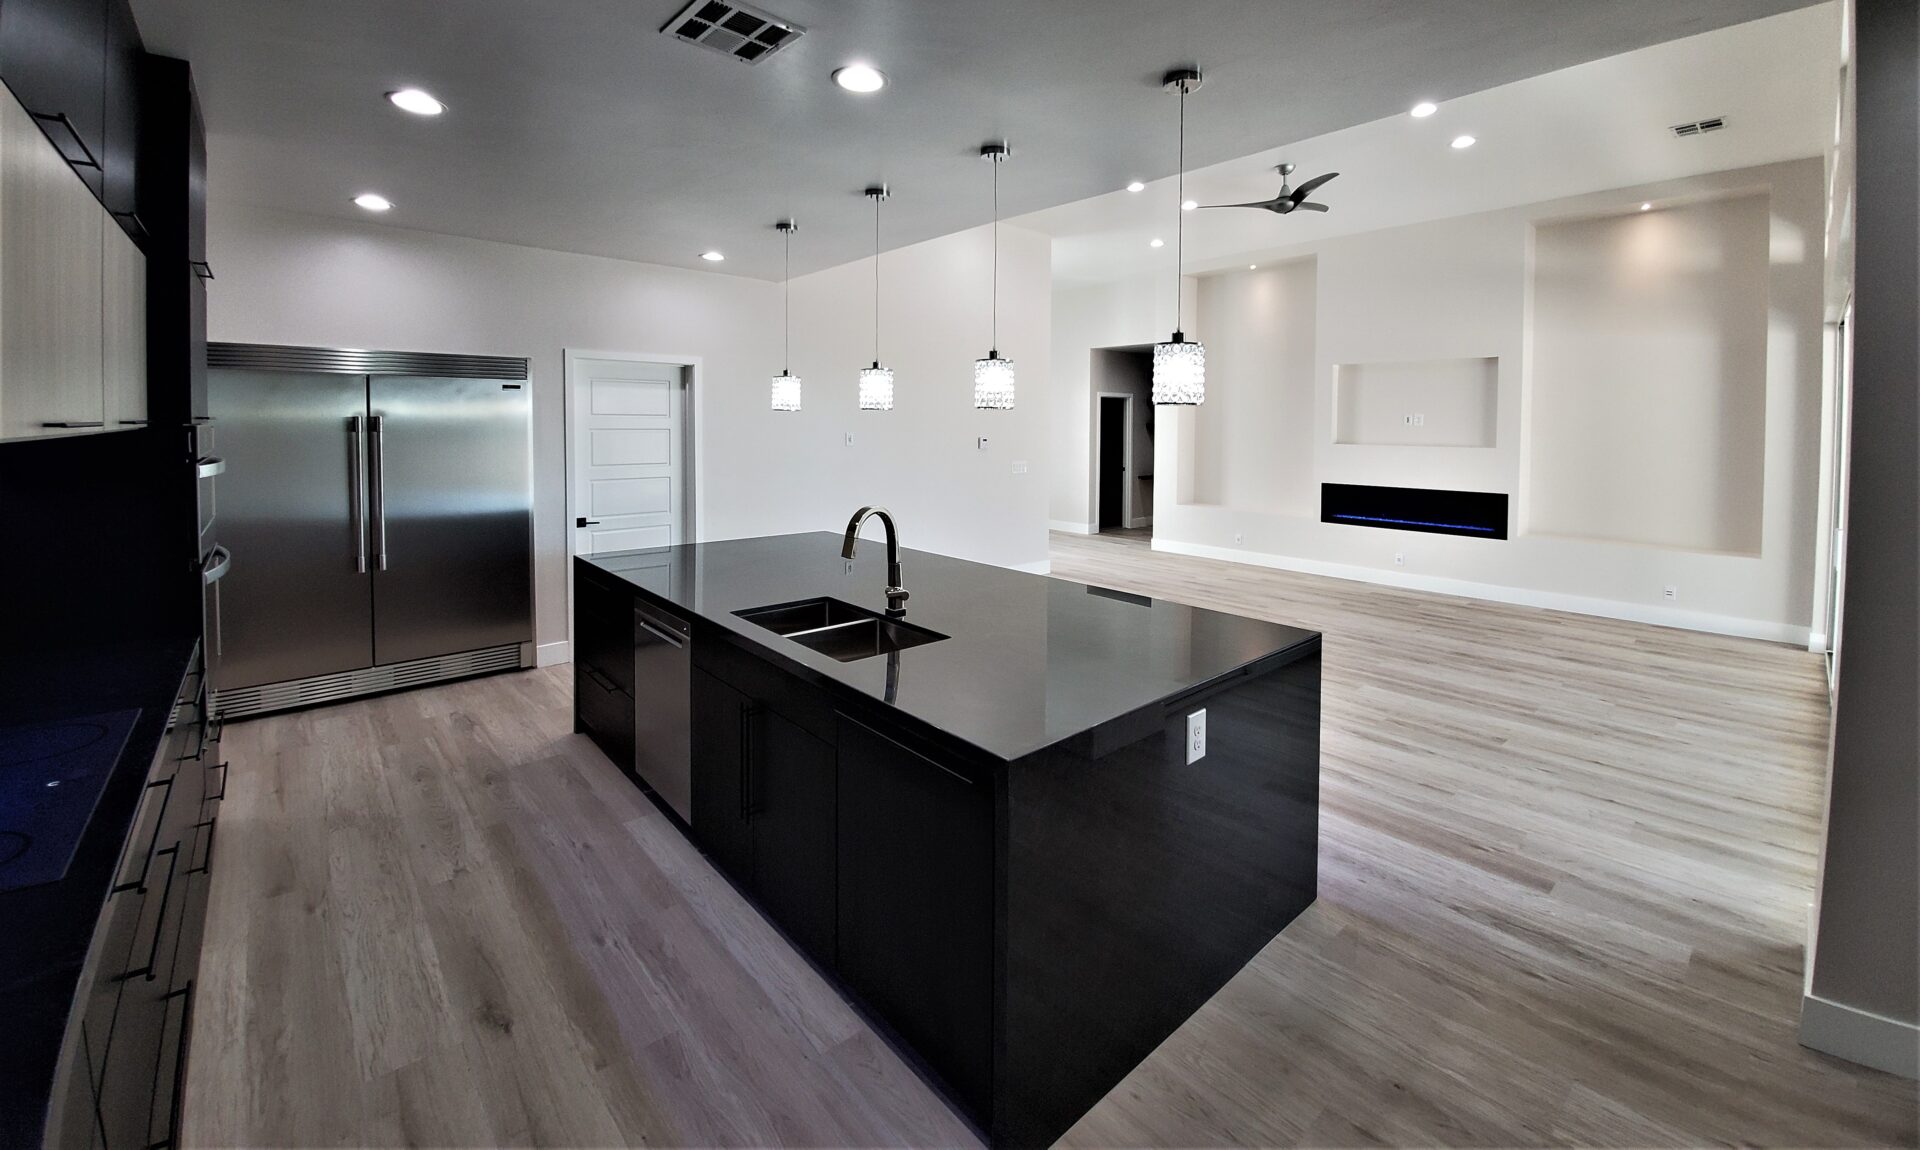 A custom black interior for the kitchen